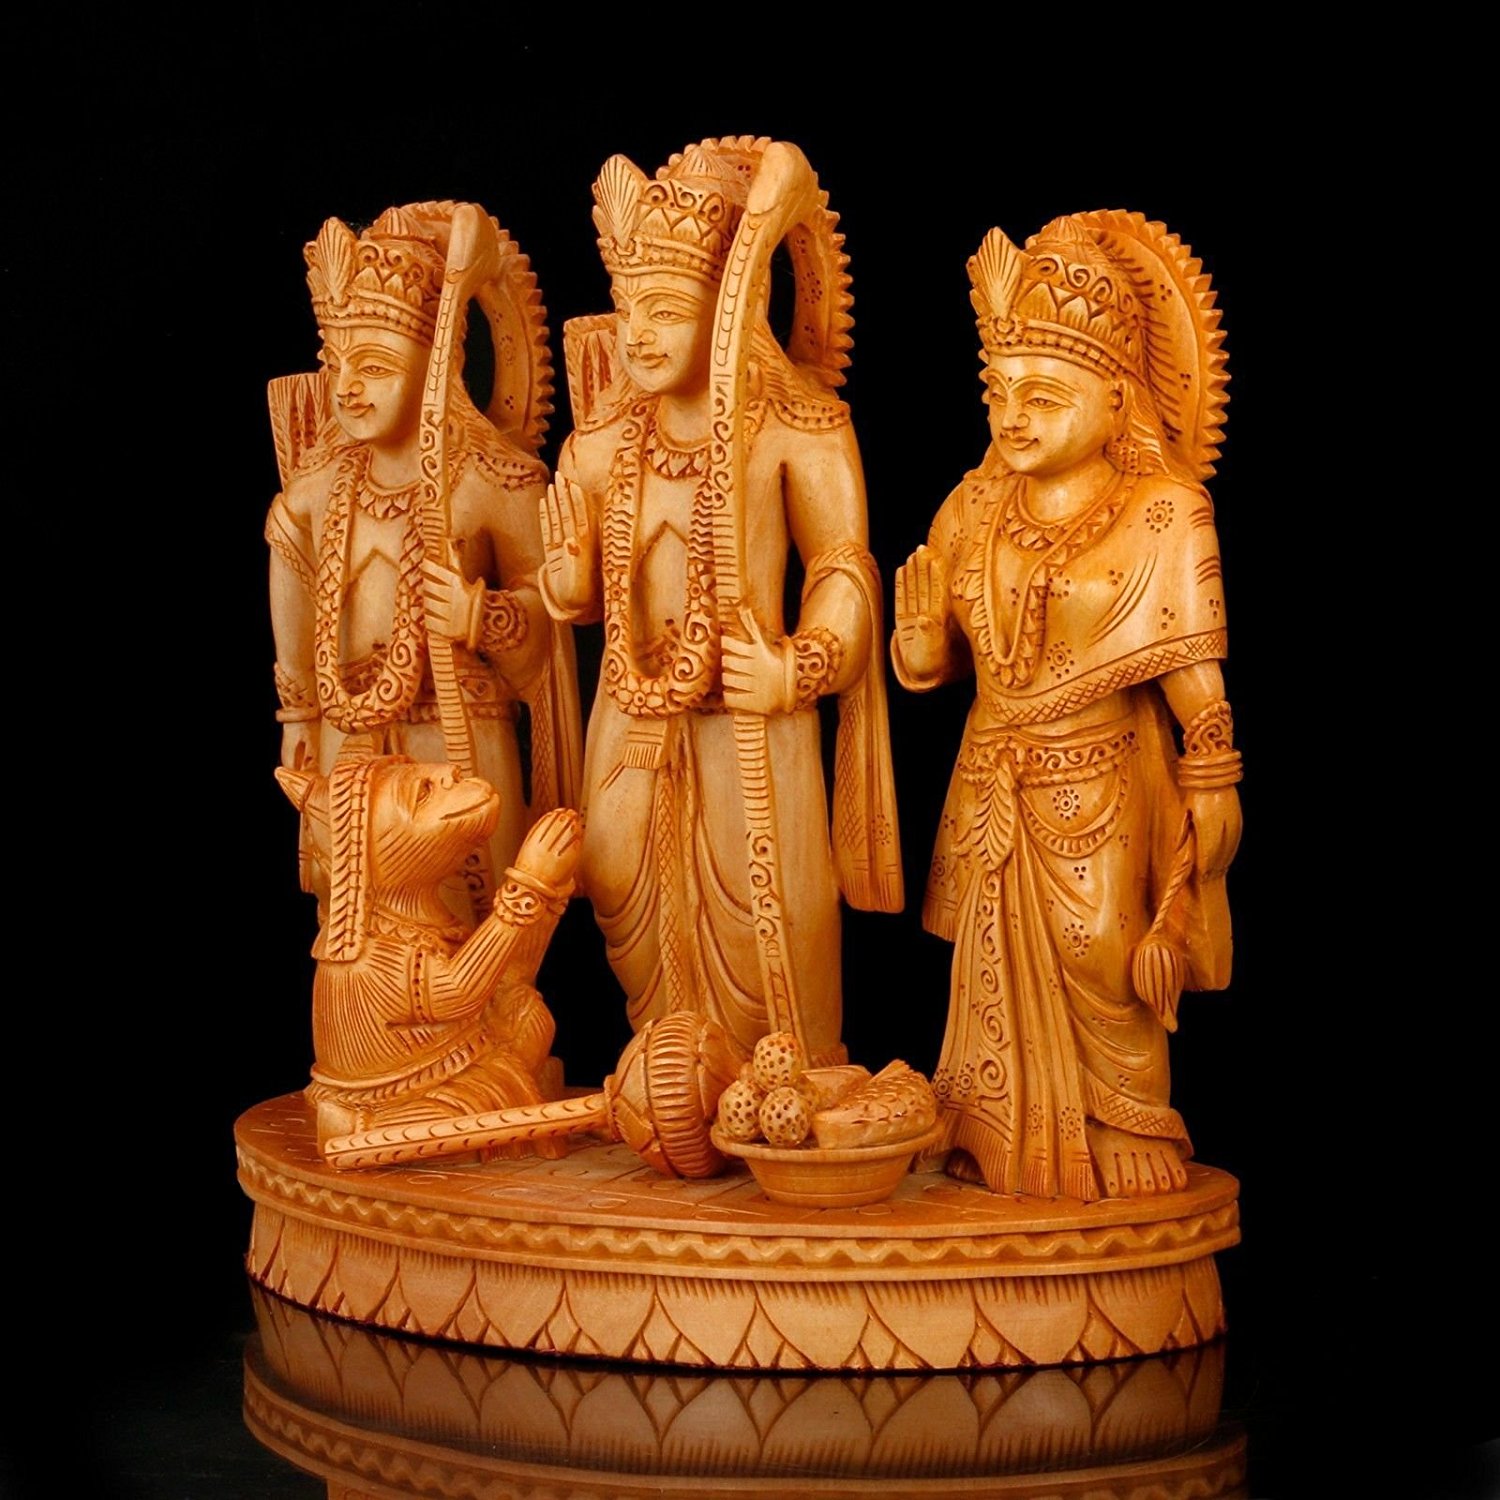 Amazon.com: CraftVatika Ram Darbar Statue Wooden Hindu God Goddess ...